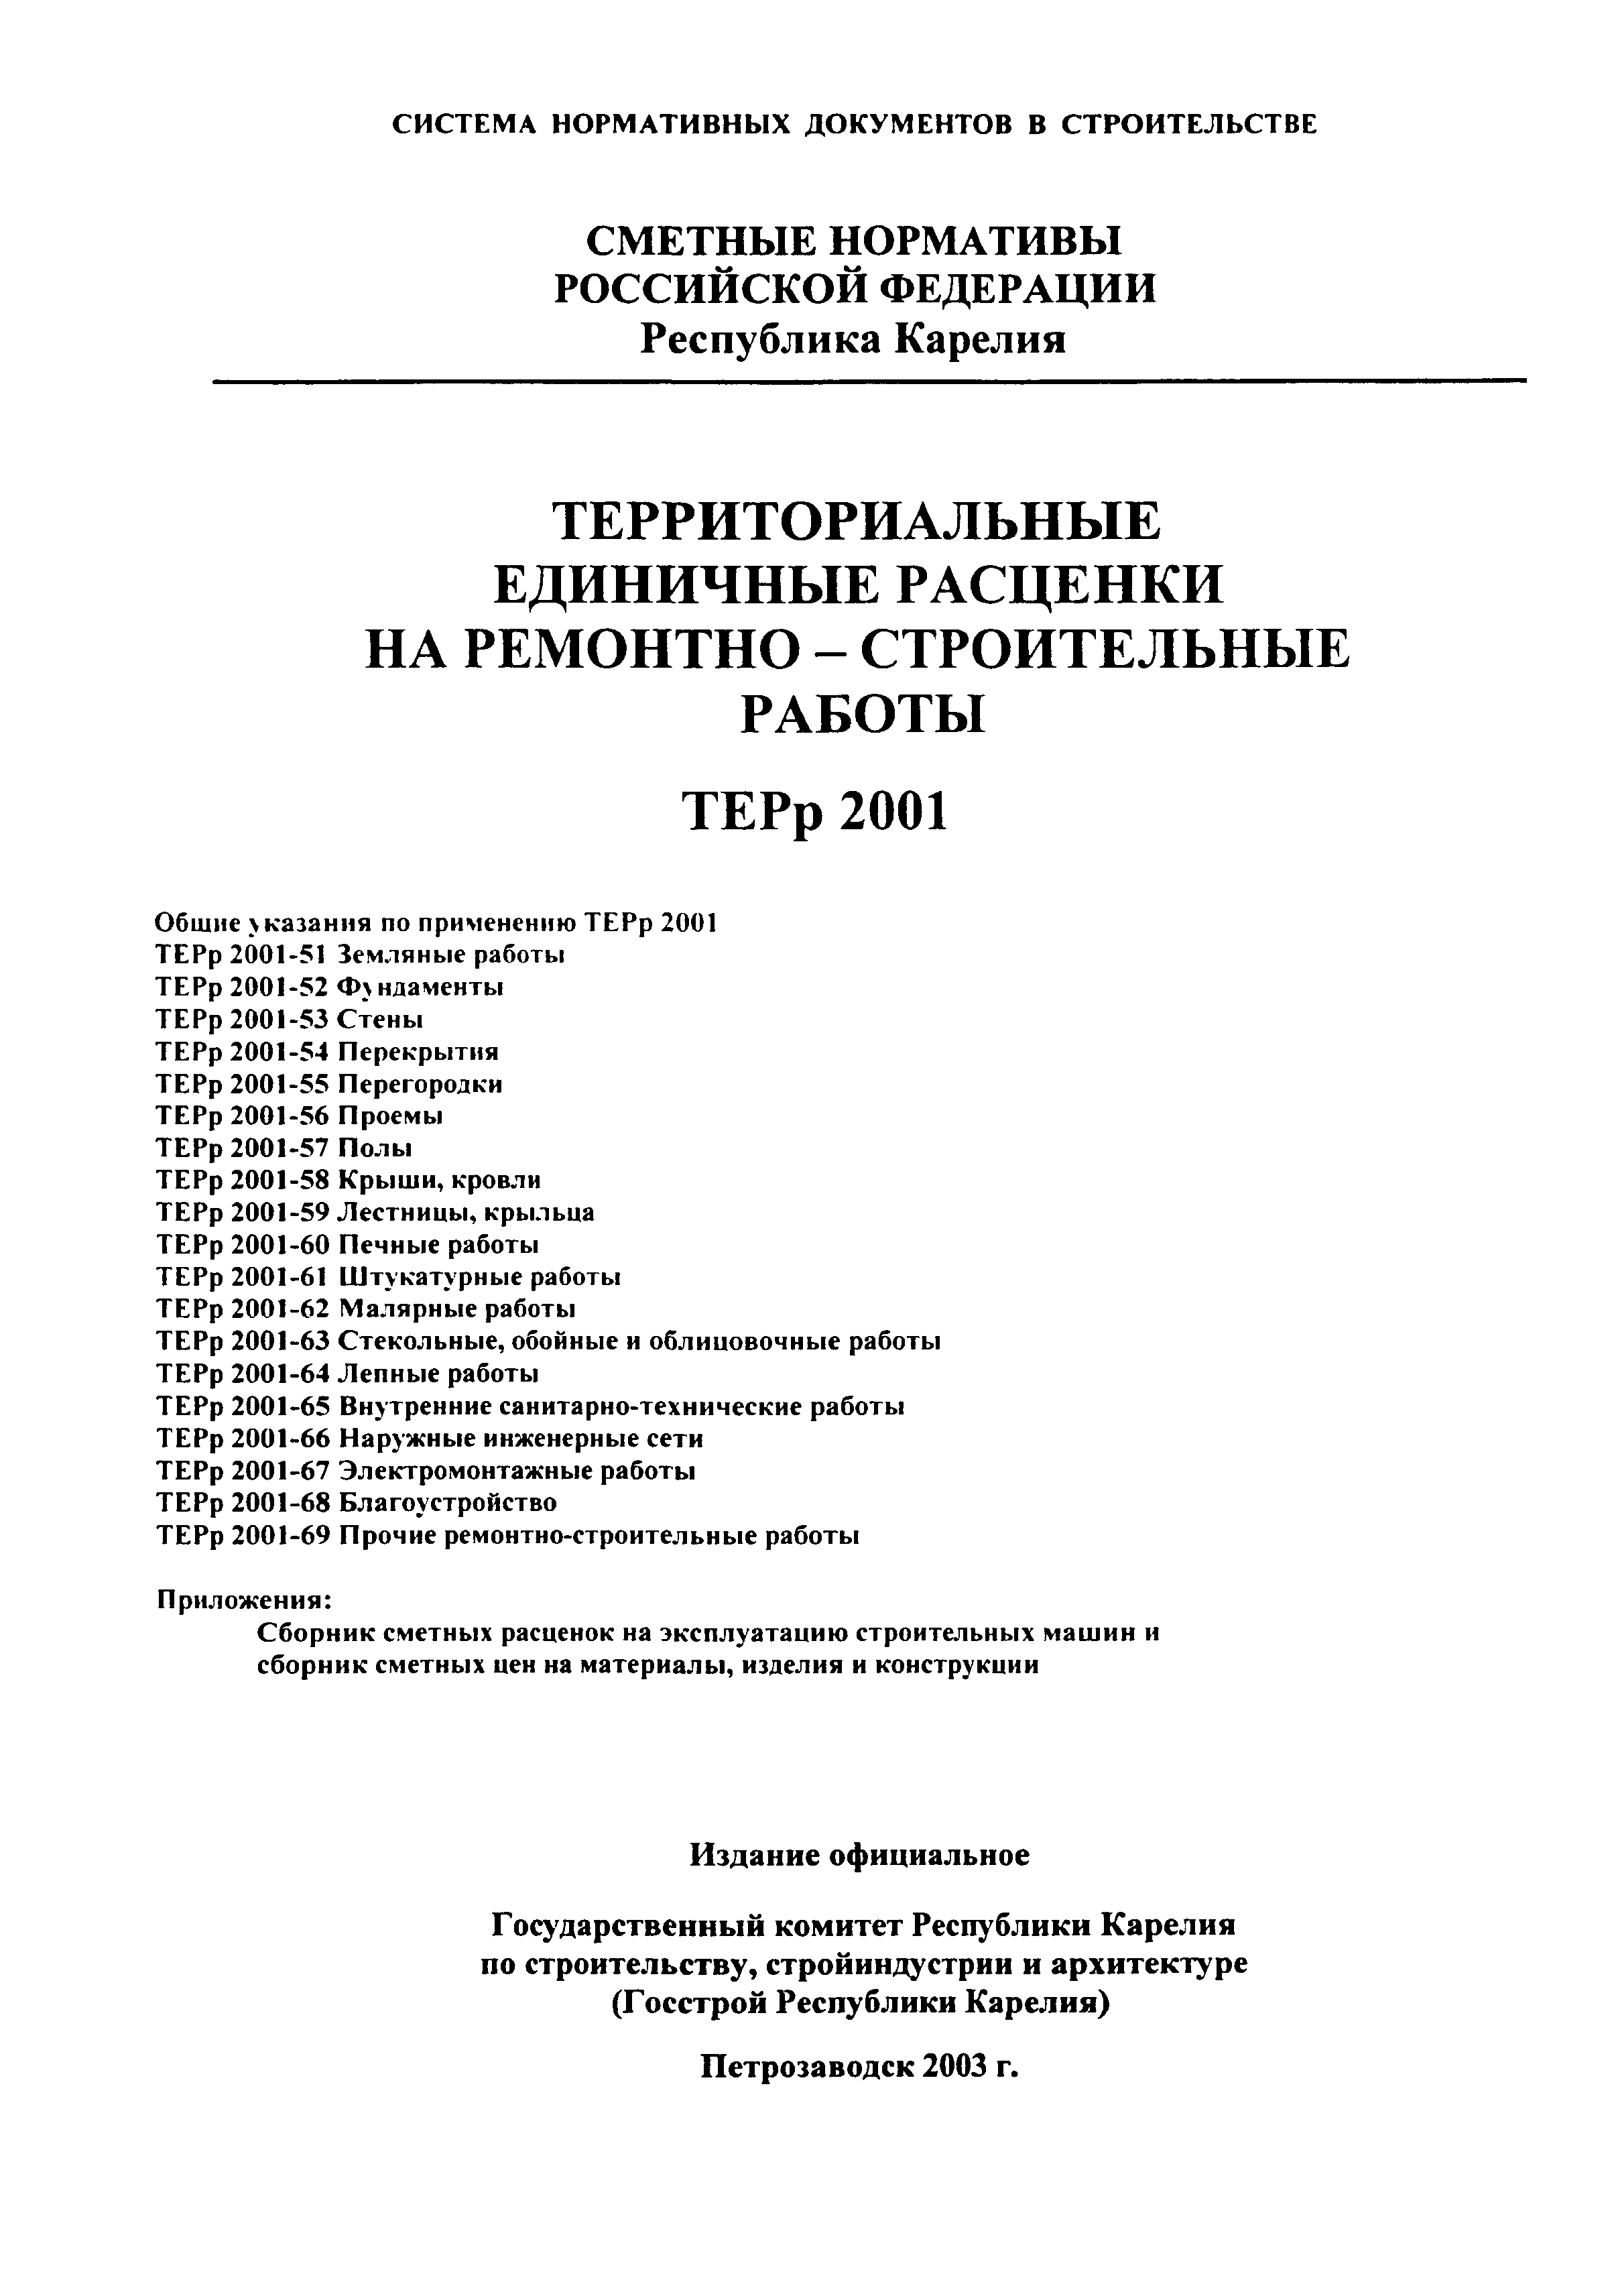 ТЕРр Республика Карелия 2001-51